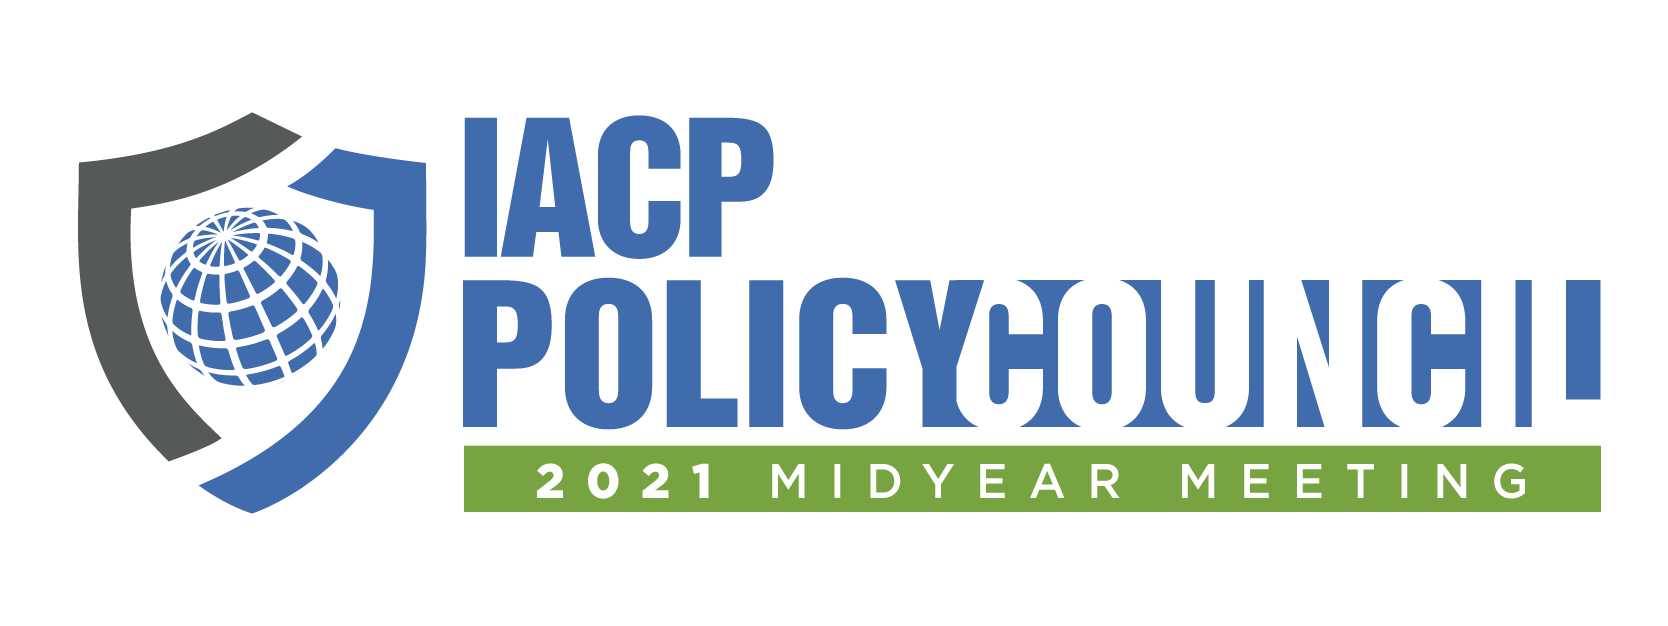 IACPlearn 2021 IACP Policy Council Midyear